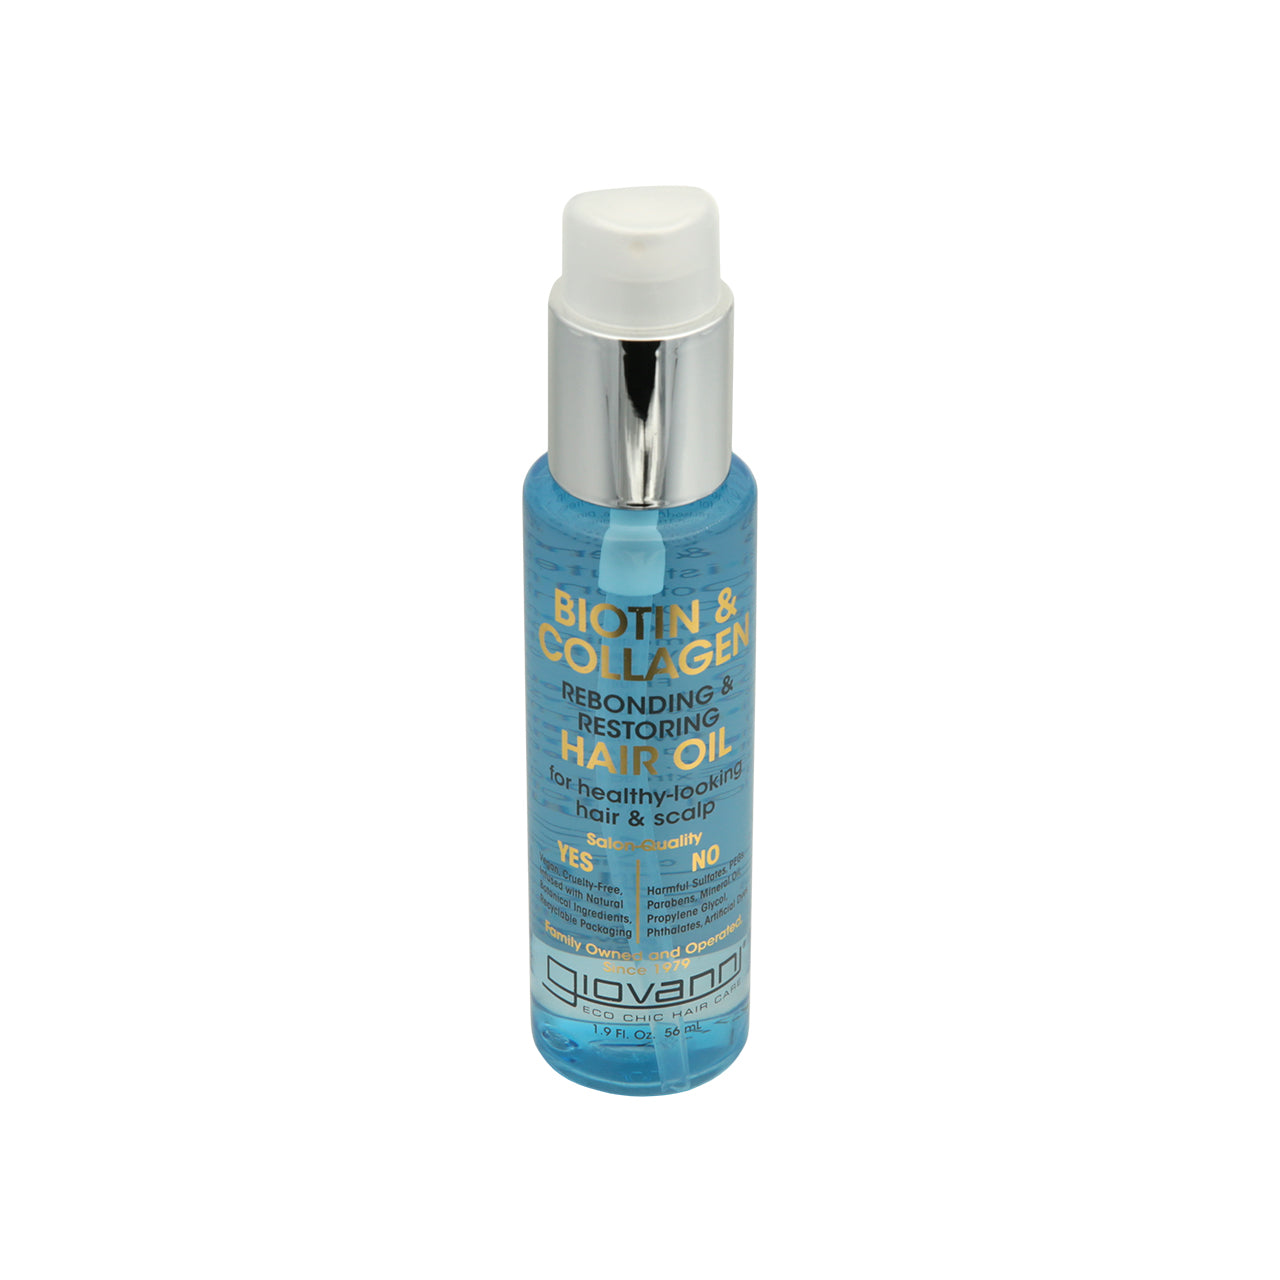 Giovanni Biotin & Collagen Rebonding & Restoring Hair Oil 1.9oz